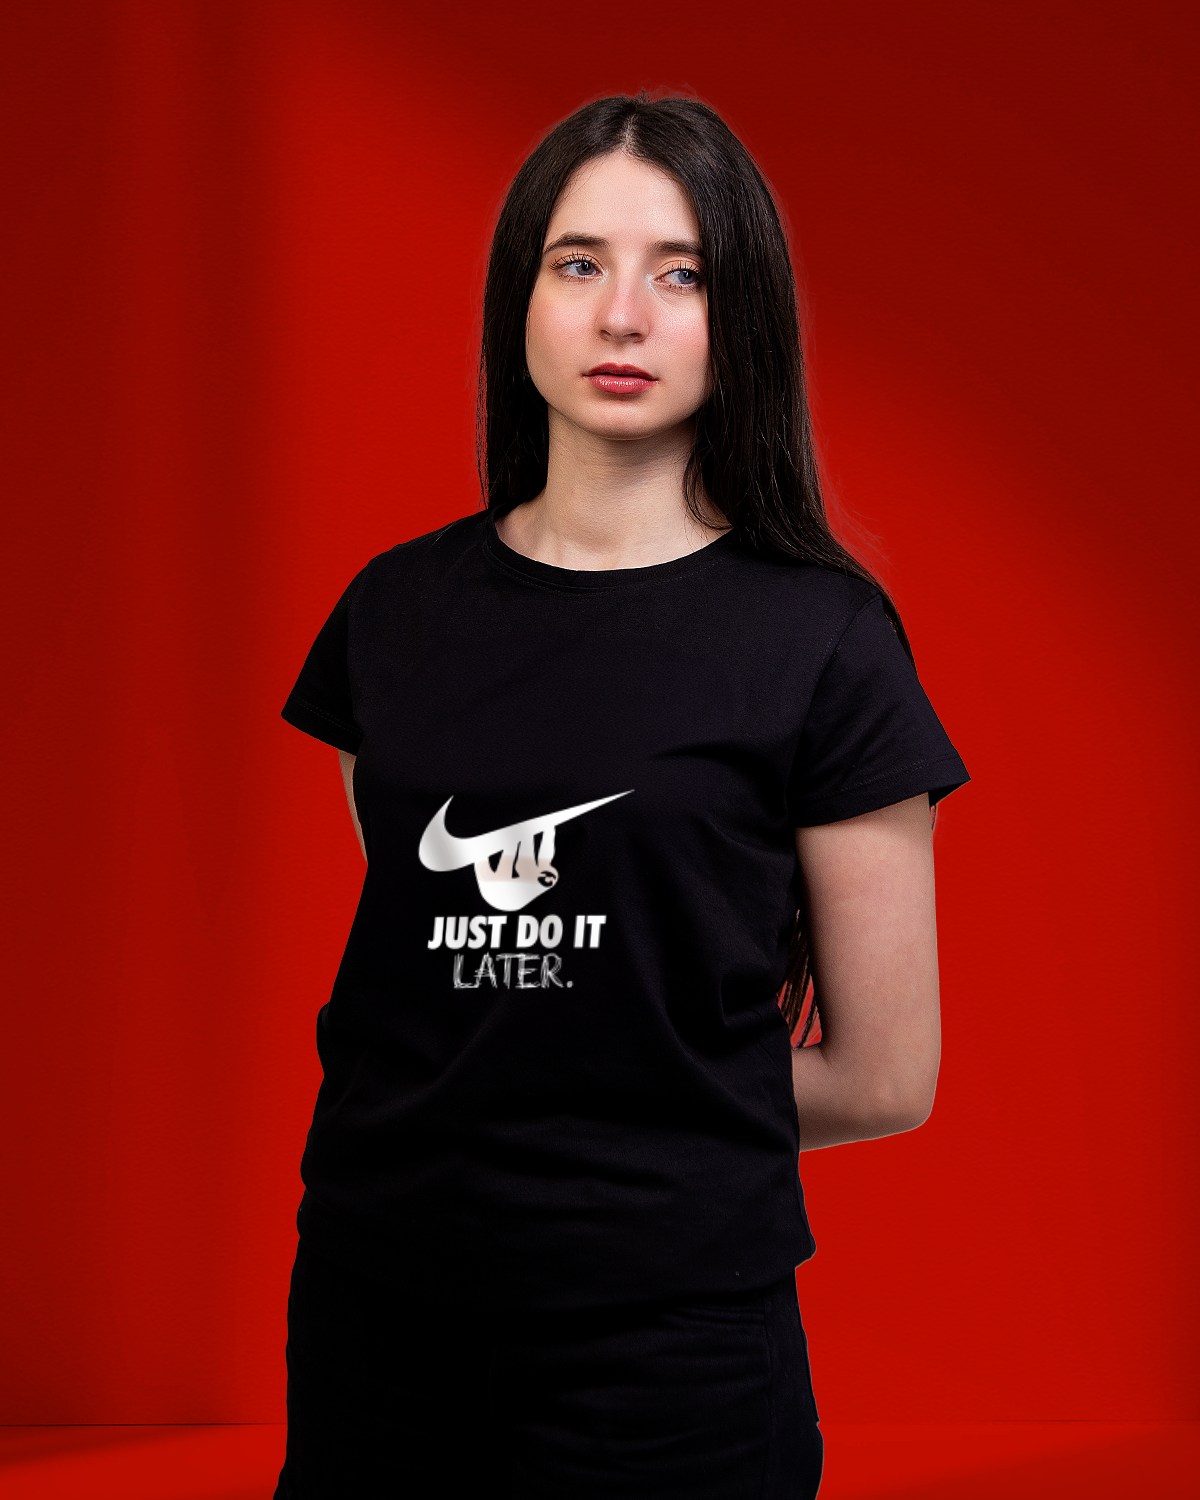 Women's T-Shirt (Just Do it Later)